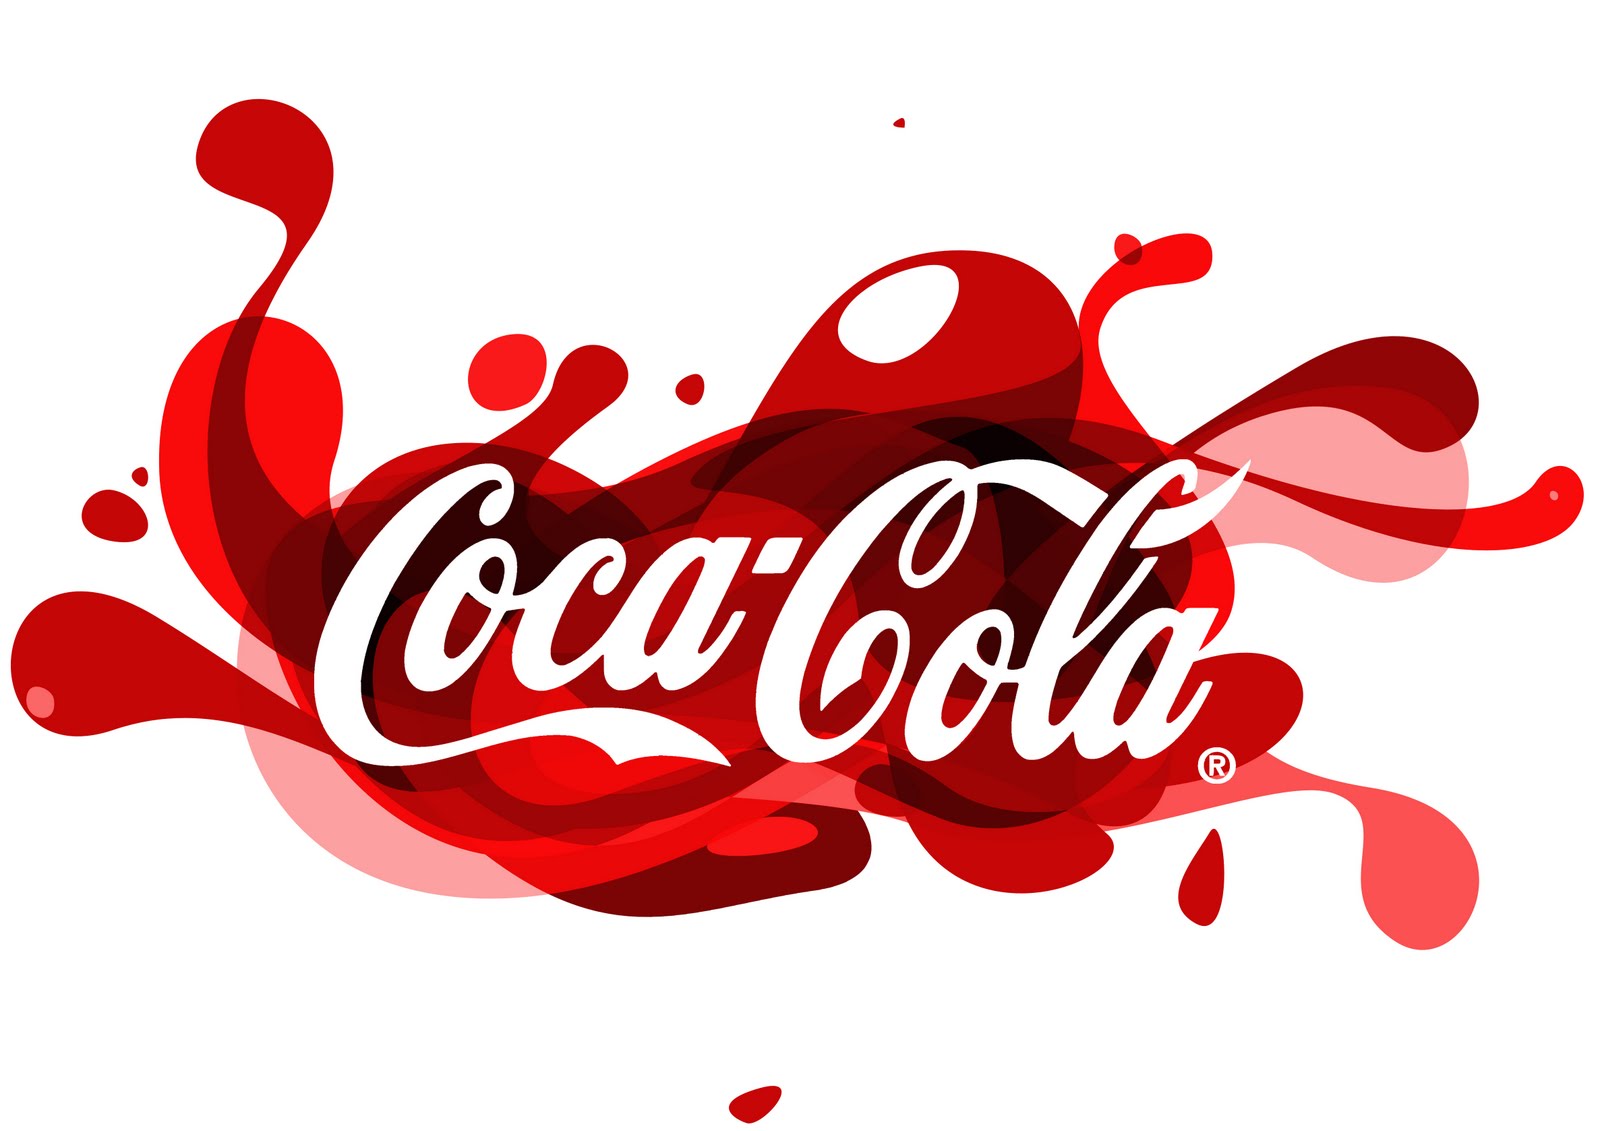 speed cola logo